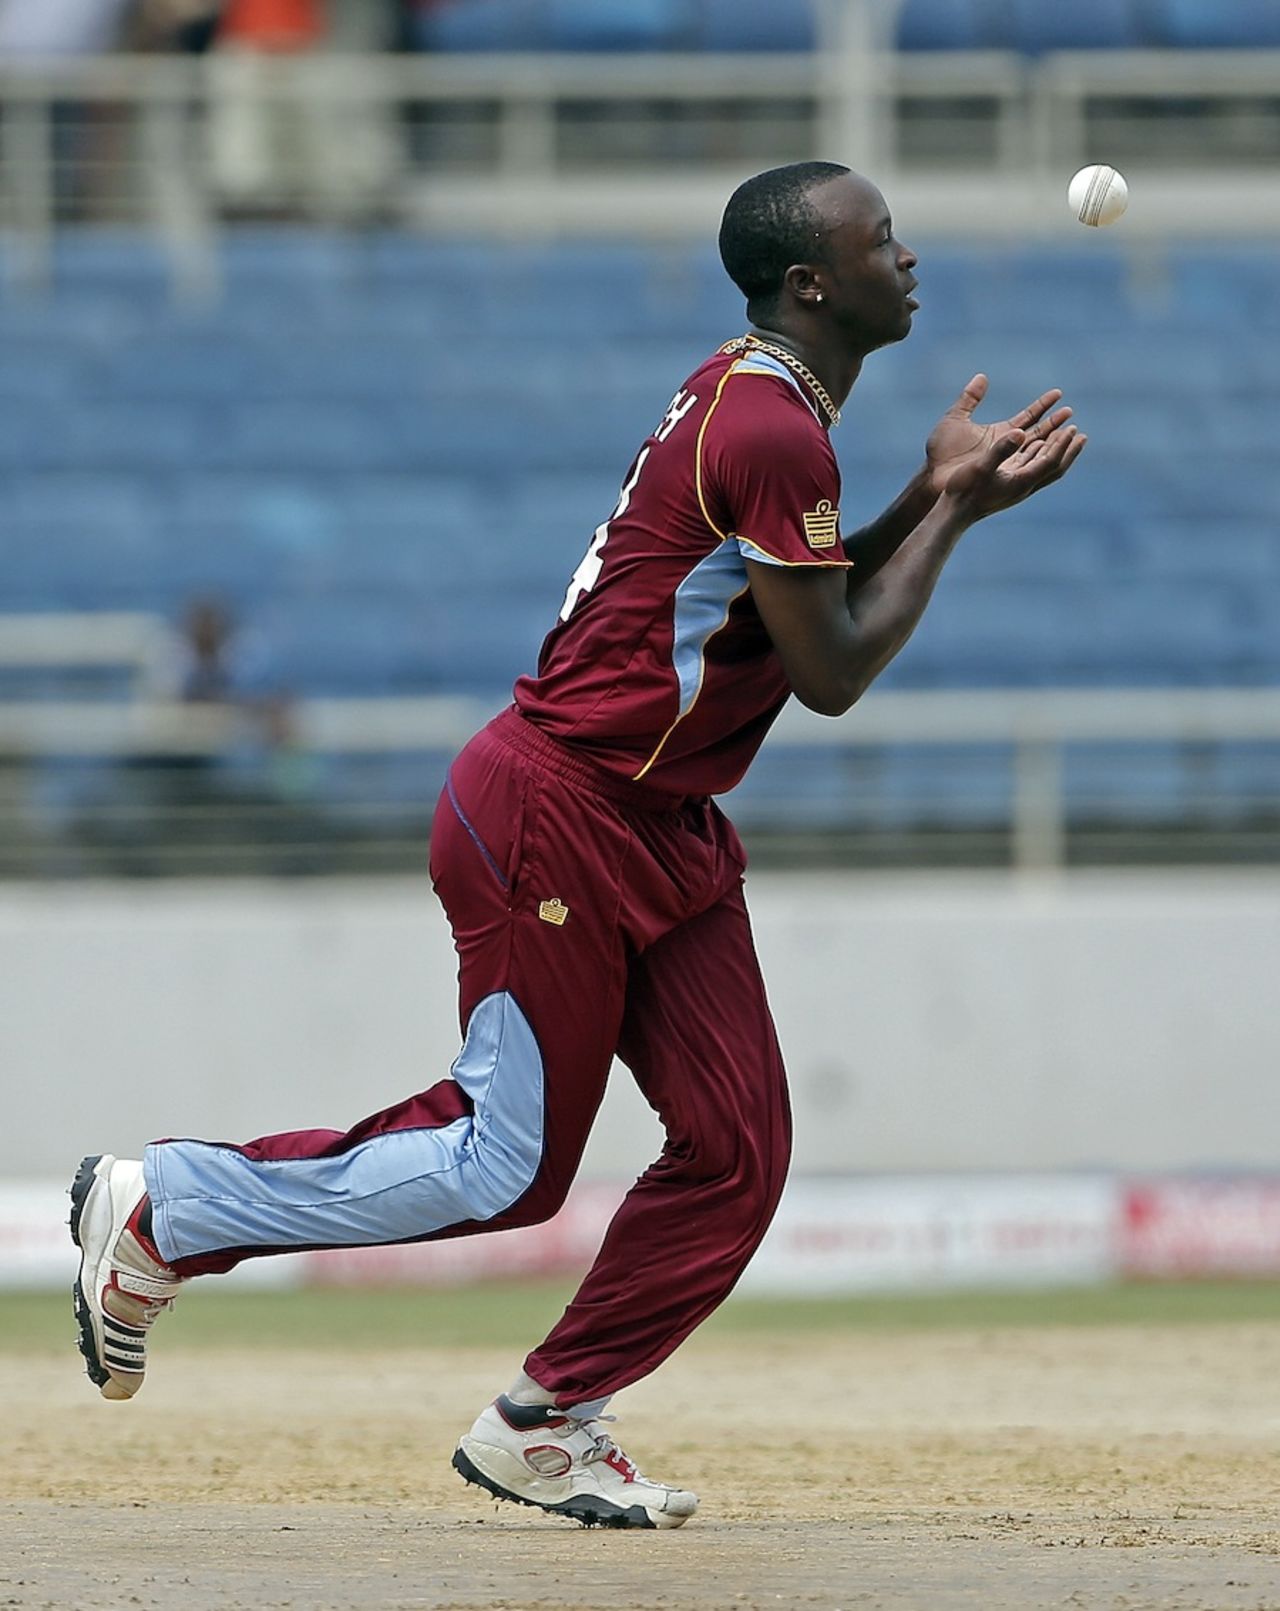 Kemar Roach juggled a return catch to dismiss Shikhar Dhawan, West Indies v India, West Indies tri-series, Kingston, June 30, 2013